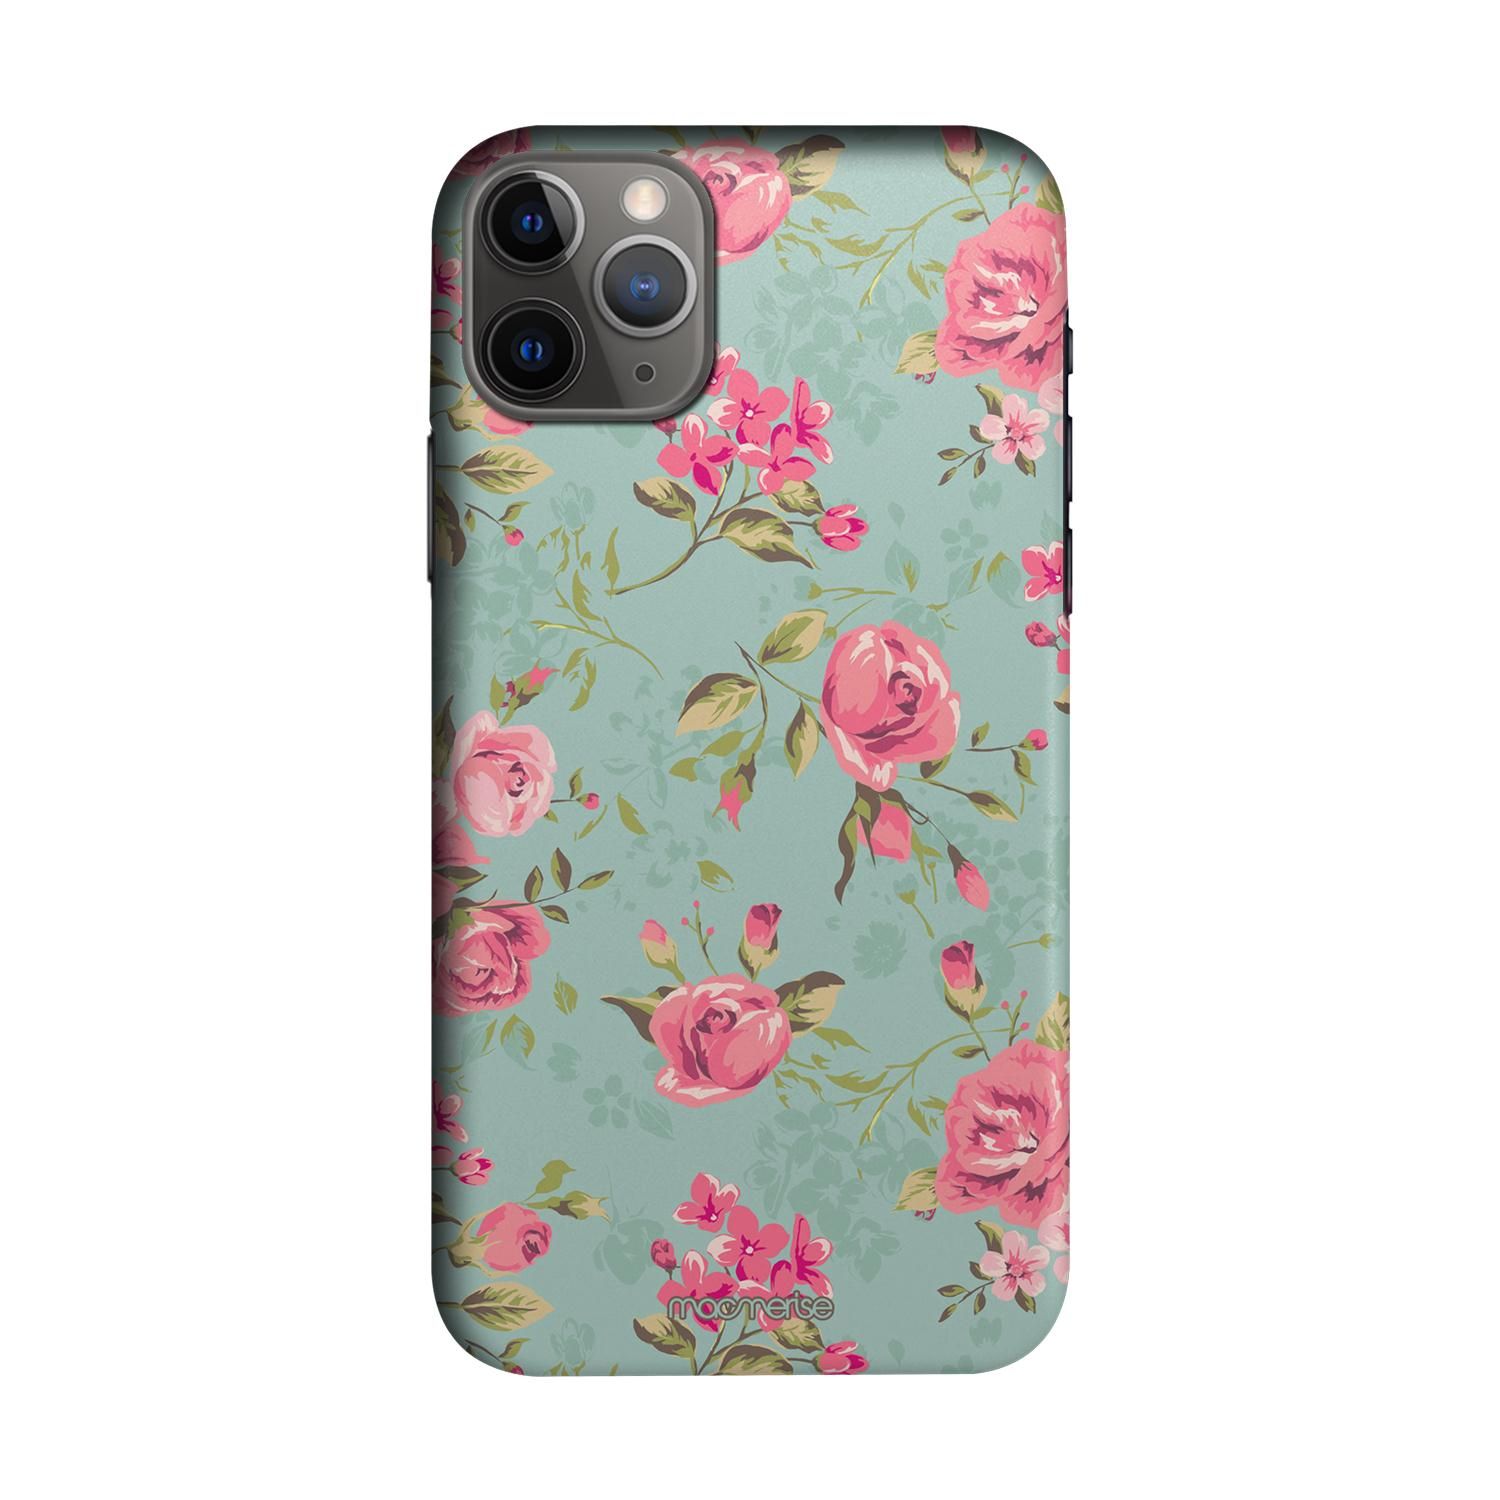 Buy Teal Pink Flowers - Sleek Phone Case for iPhone 11 Pro Online